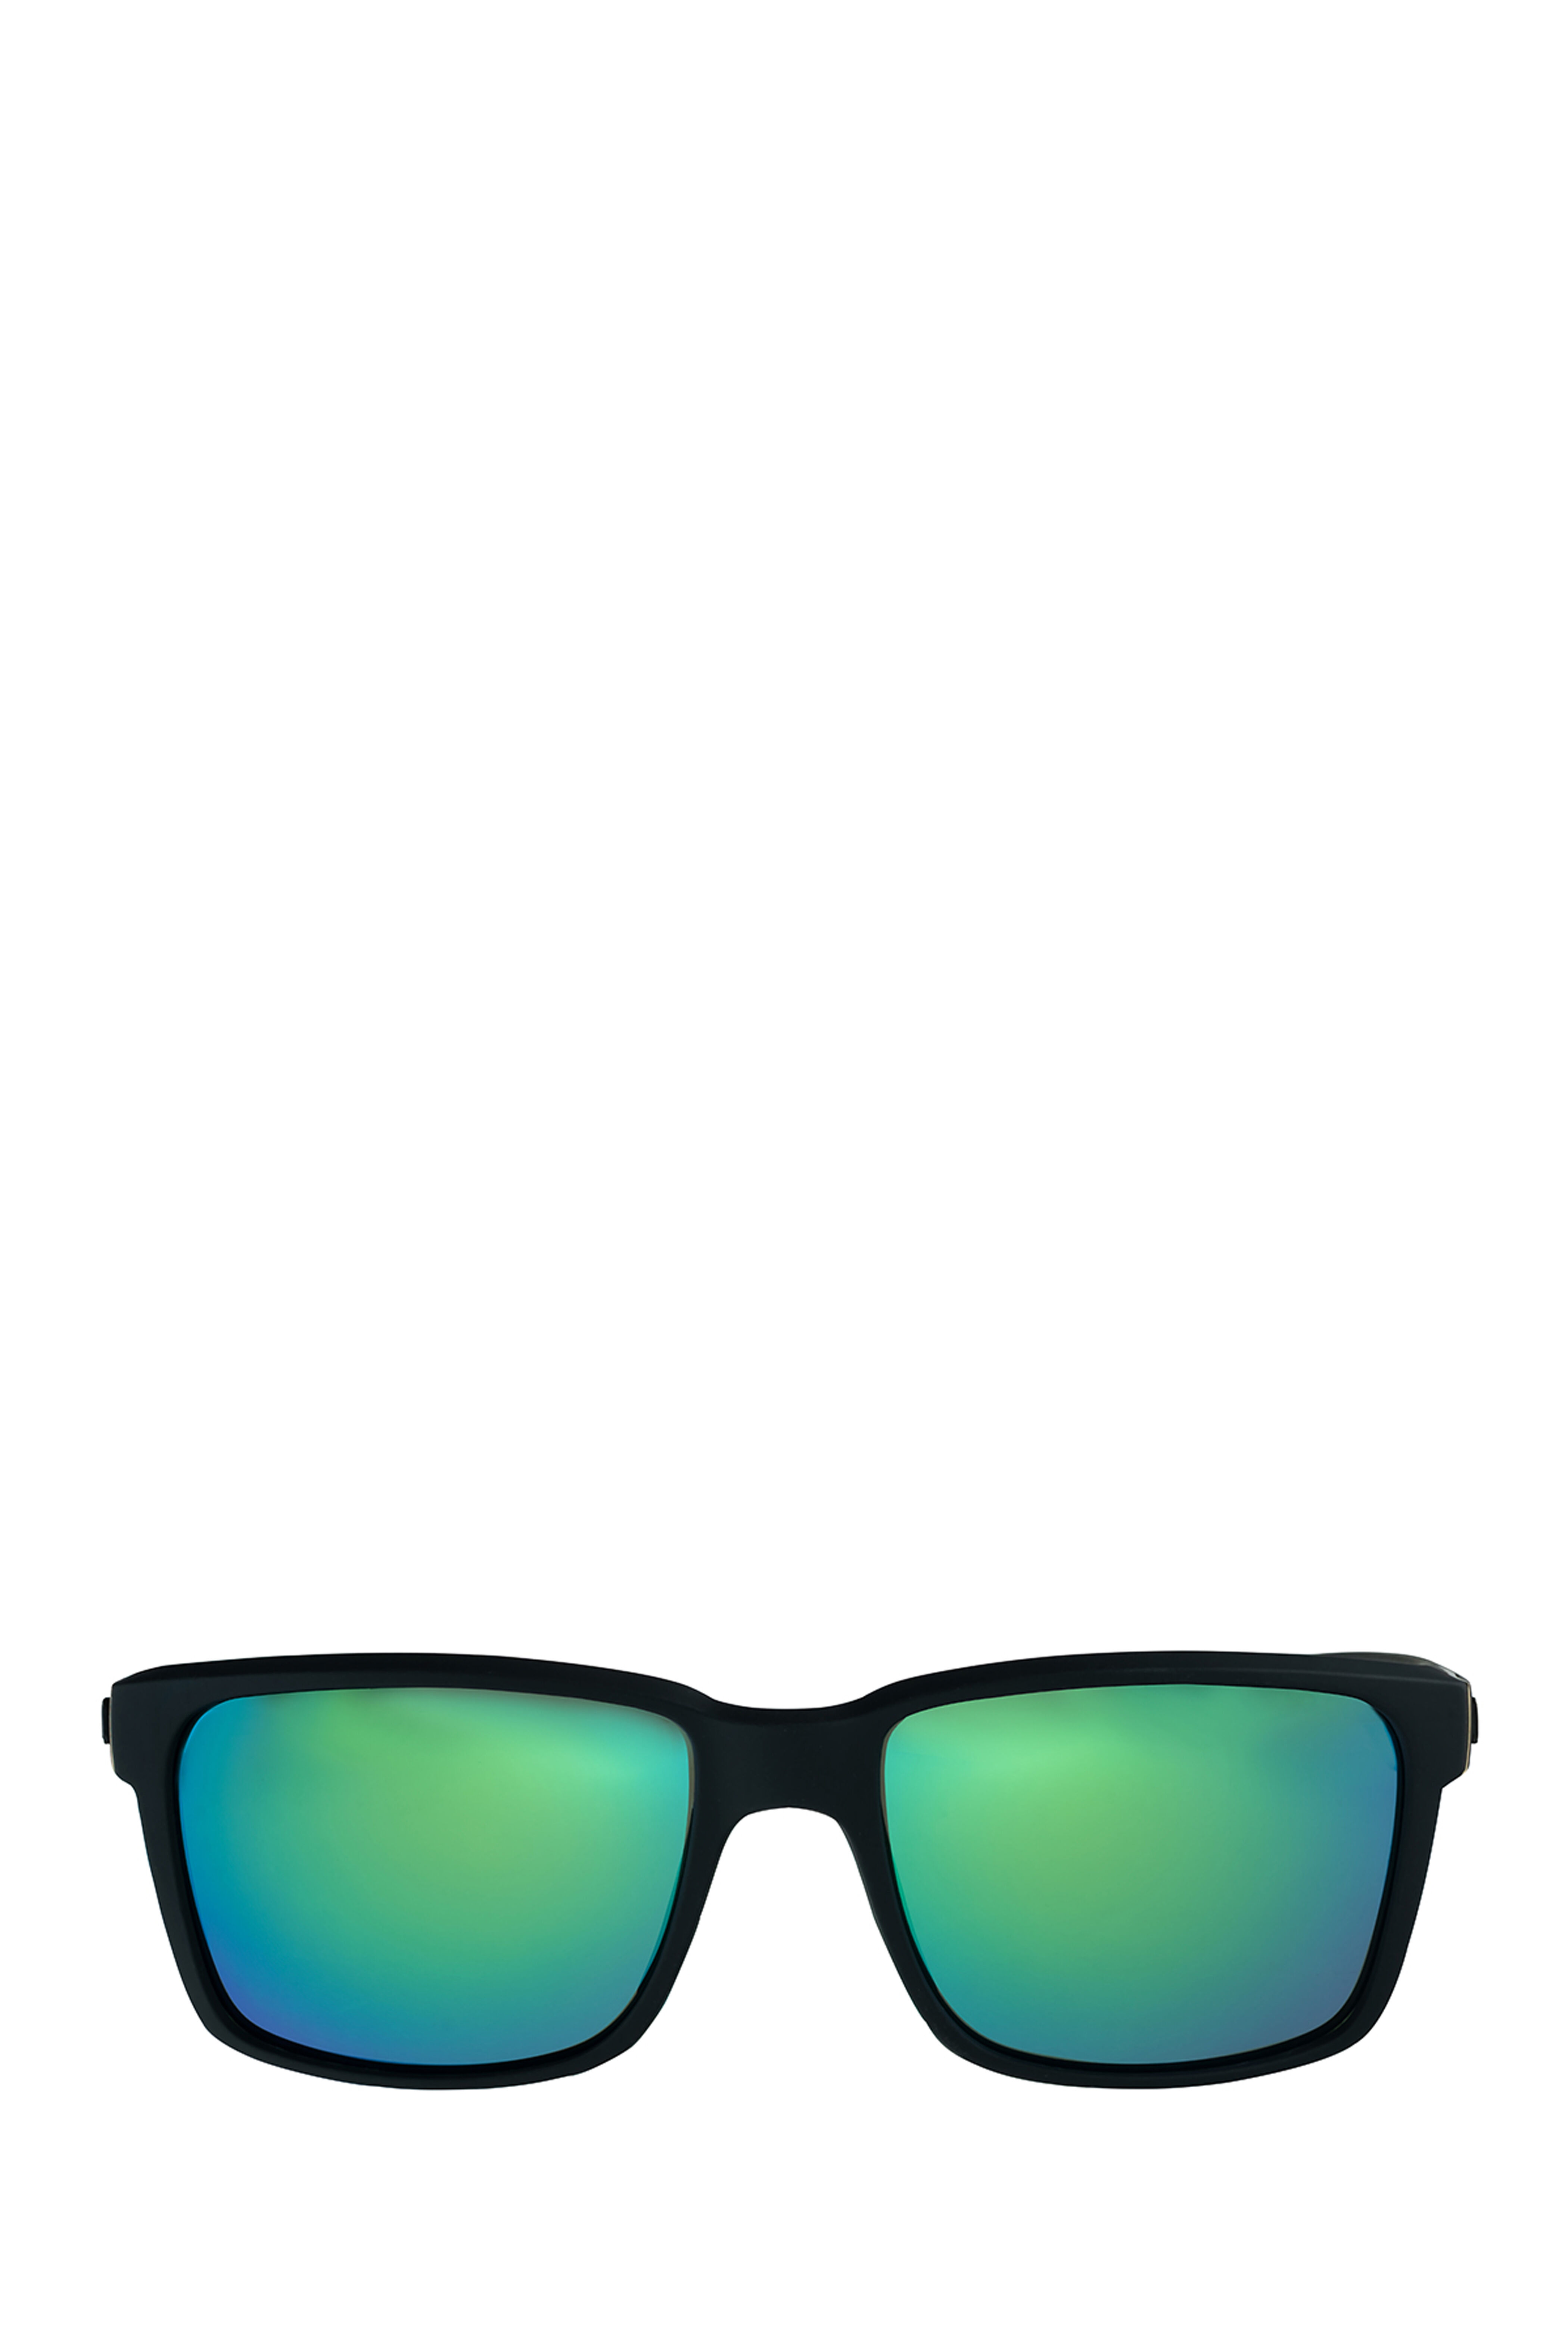 Buy Multi Sunglasses for Women by CARLTON LONDON Online | Ajio.com